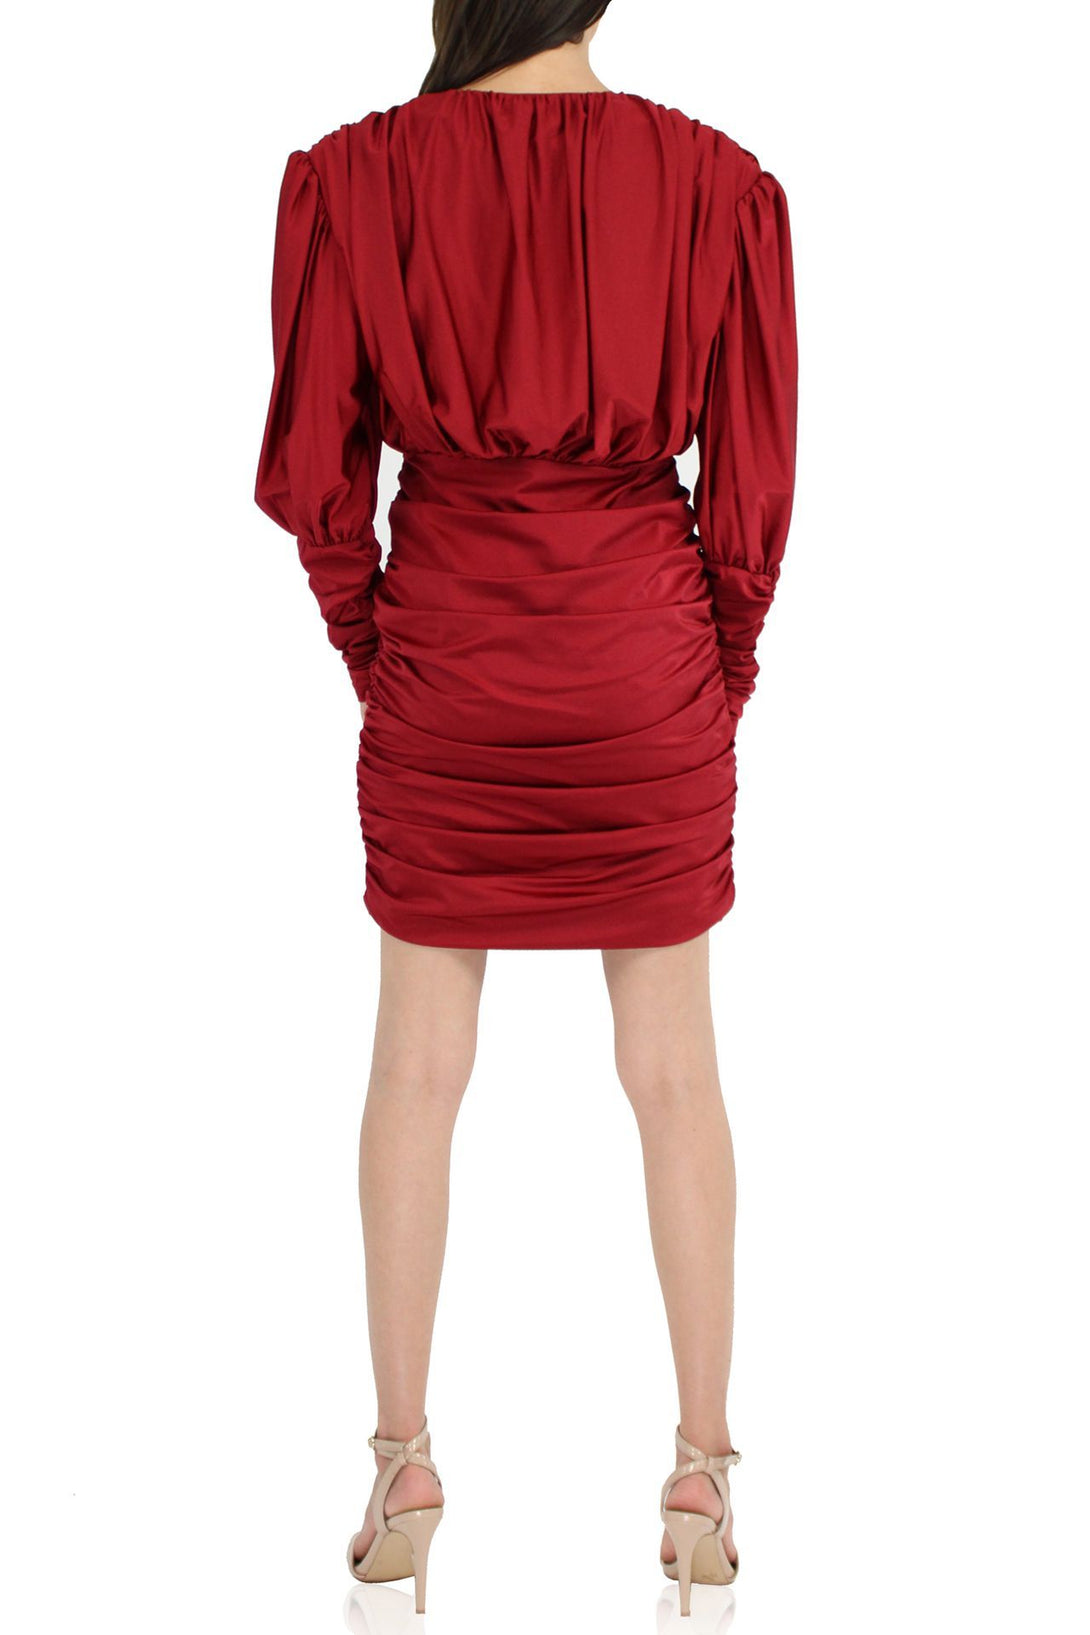 Silk-Satin-Designer-Mini-Dress-In-Red-From-Kyle-Richard